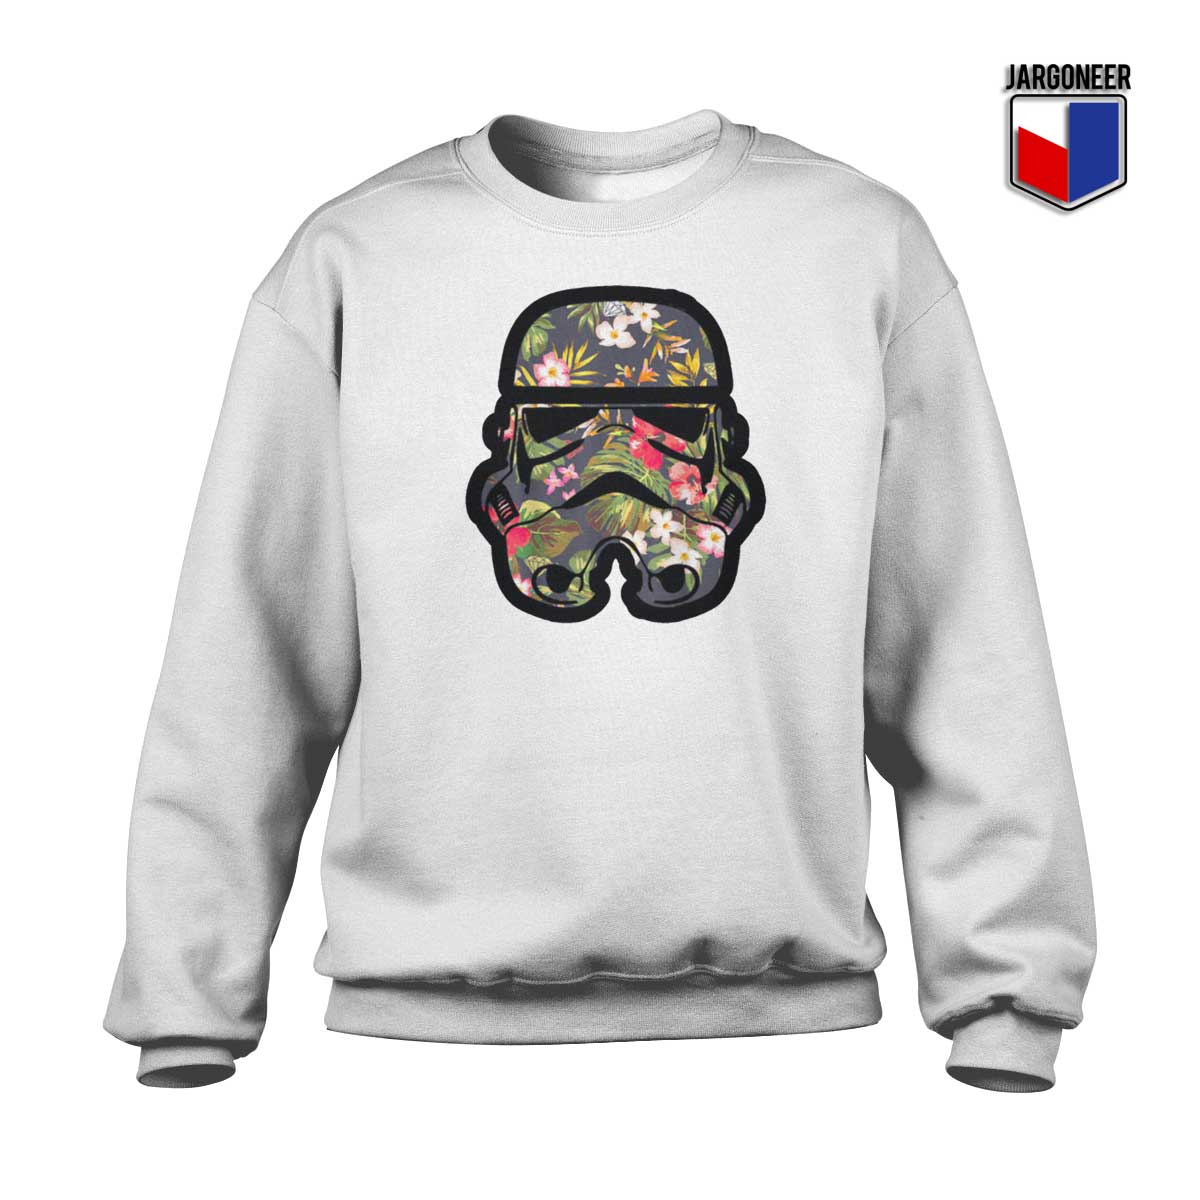 Stormtrooper Floral Crewneck Sweatshirt - Shop Unique Graphic Cool Shirt Designs